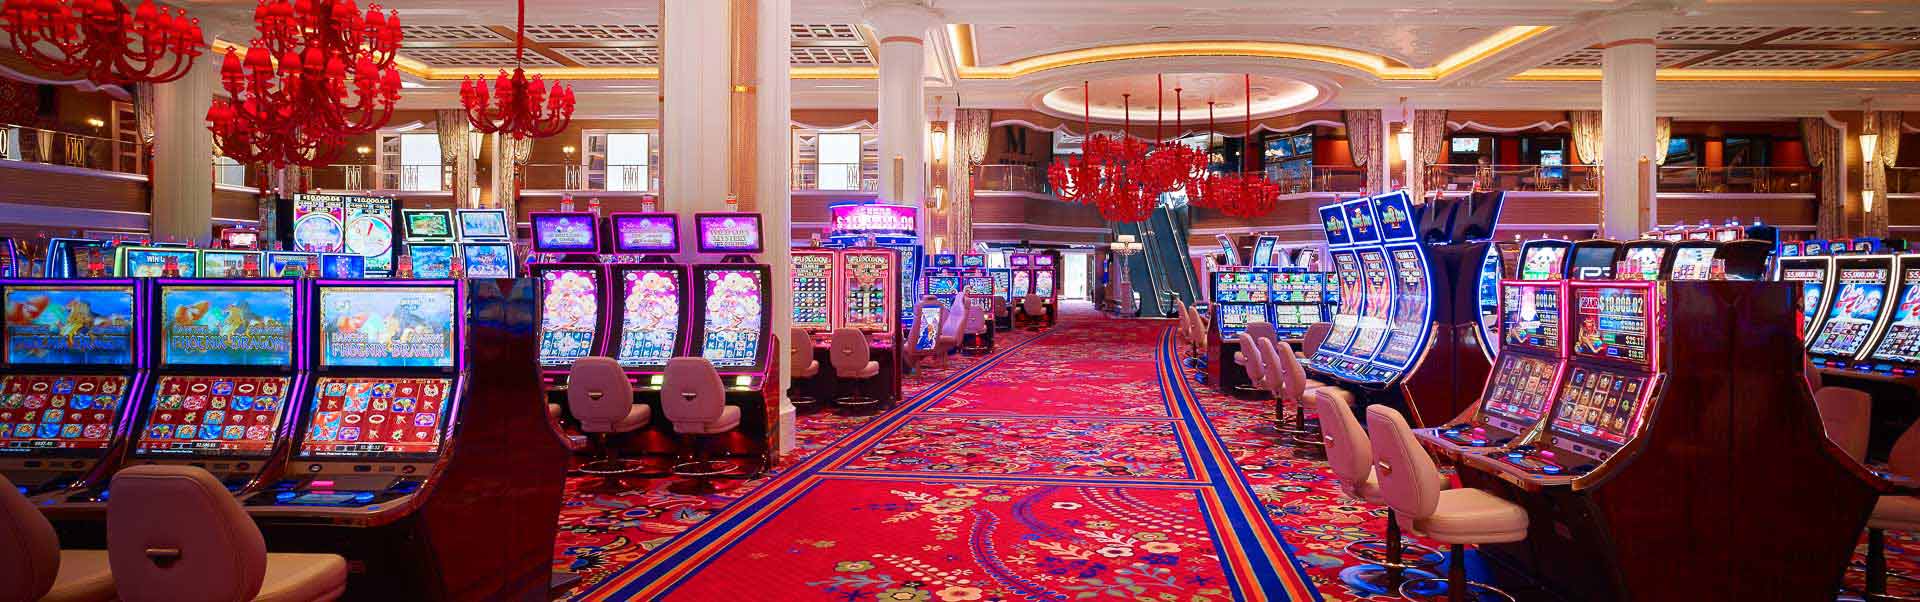 Las vegas casino free spins